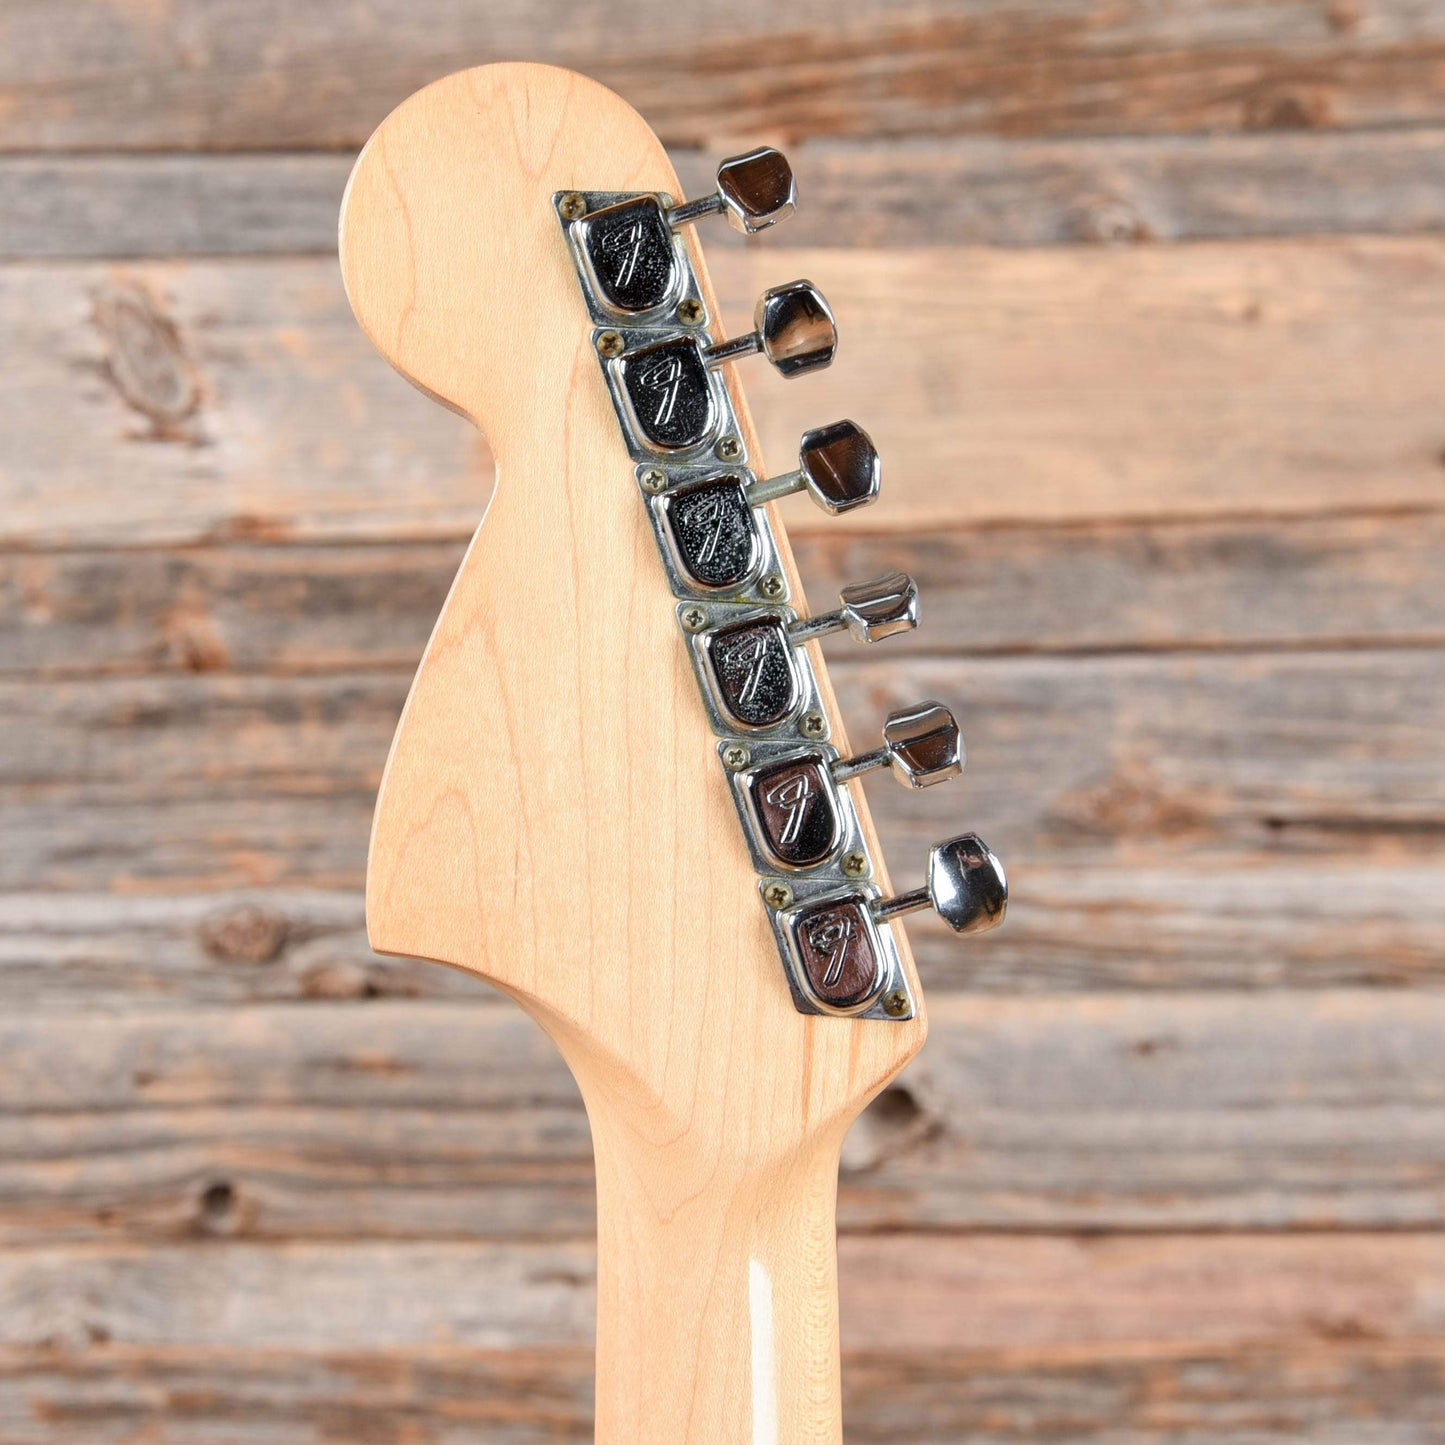 Fender Stratocaster Sunburst 1969 Electric Guitars / Solid Body